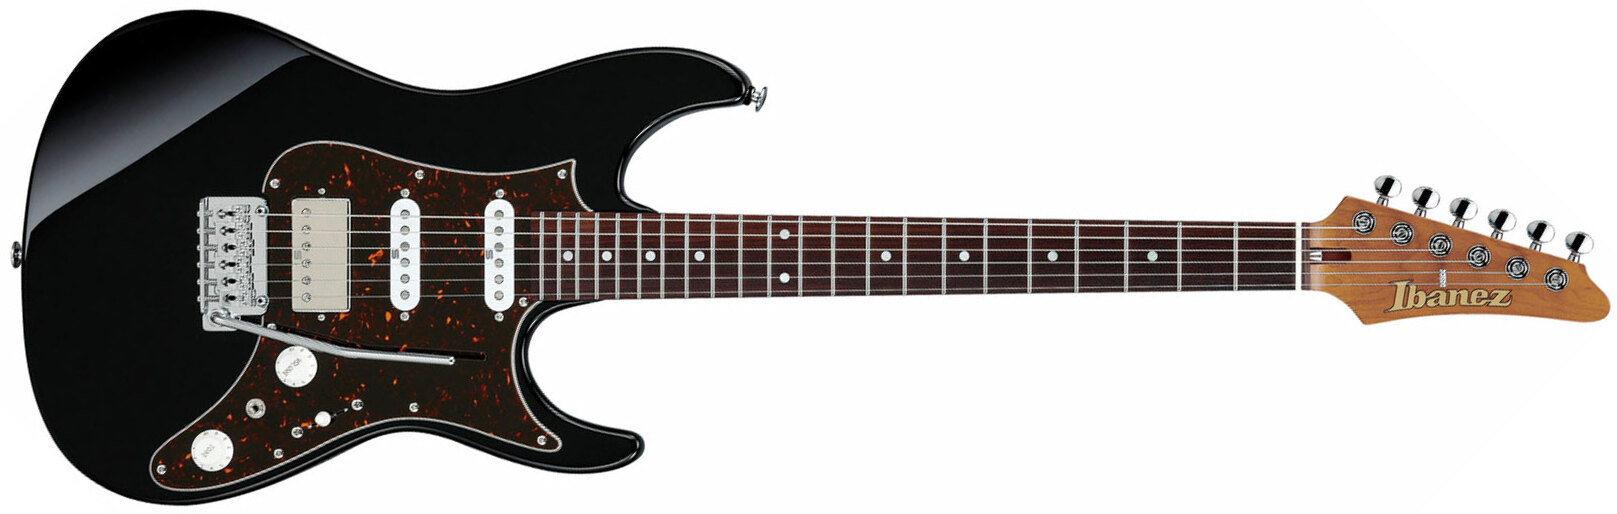 Ibanez Az2204b Bk Prestige Jap Hss Seymour Duncan Trem Mn - Black - E-Gitarre in Str-Form - Main picture